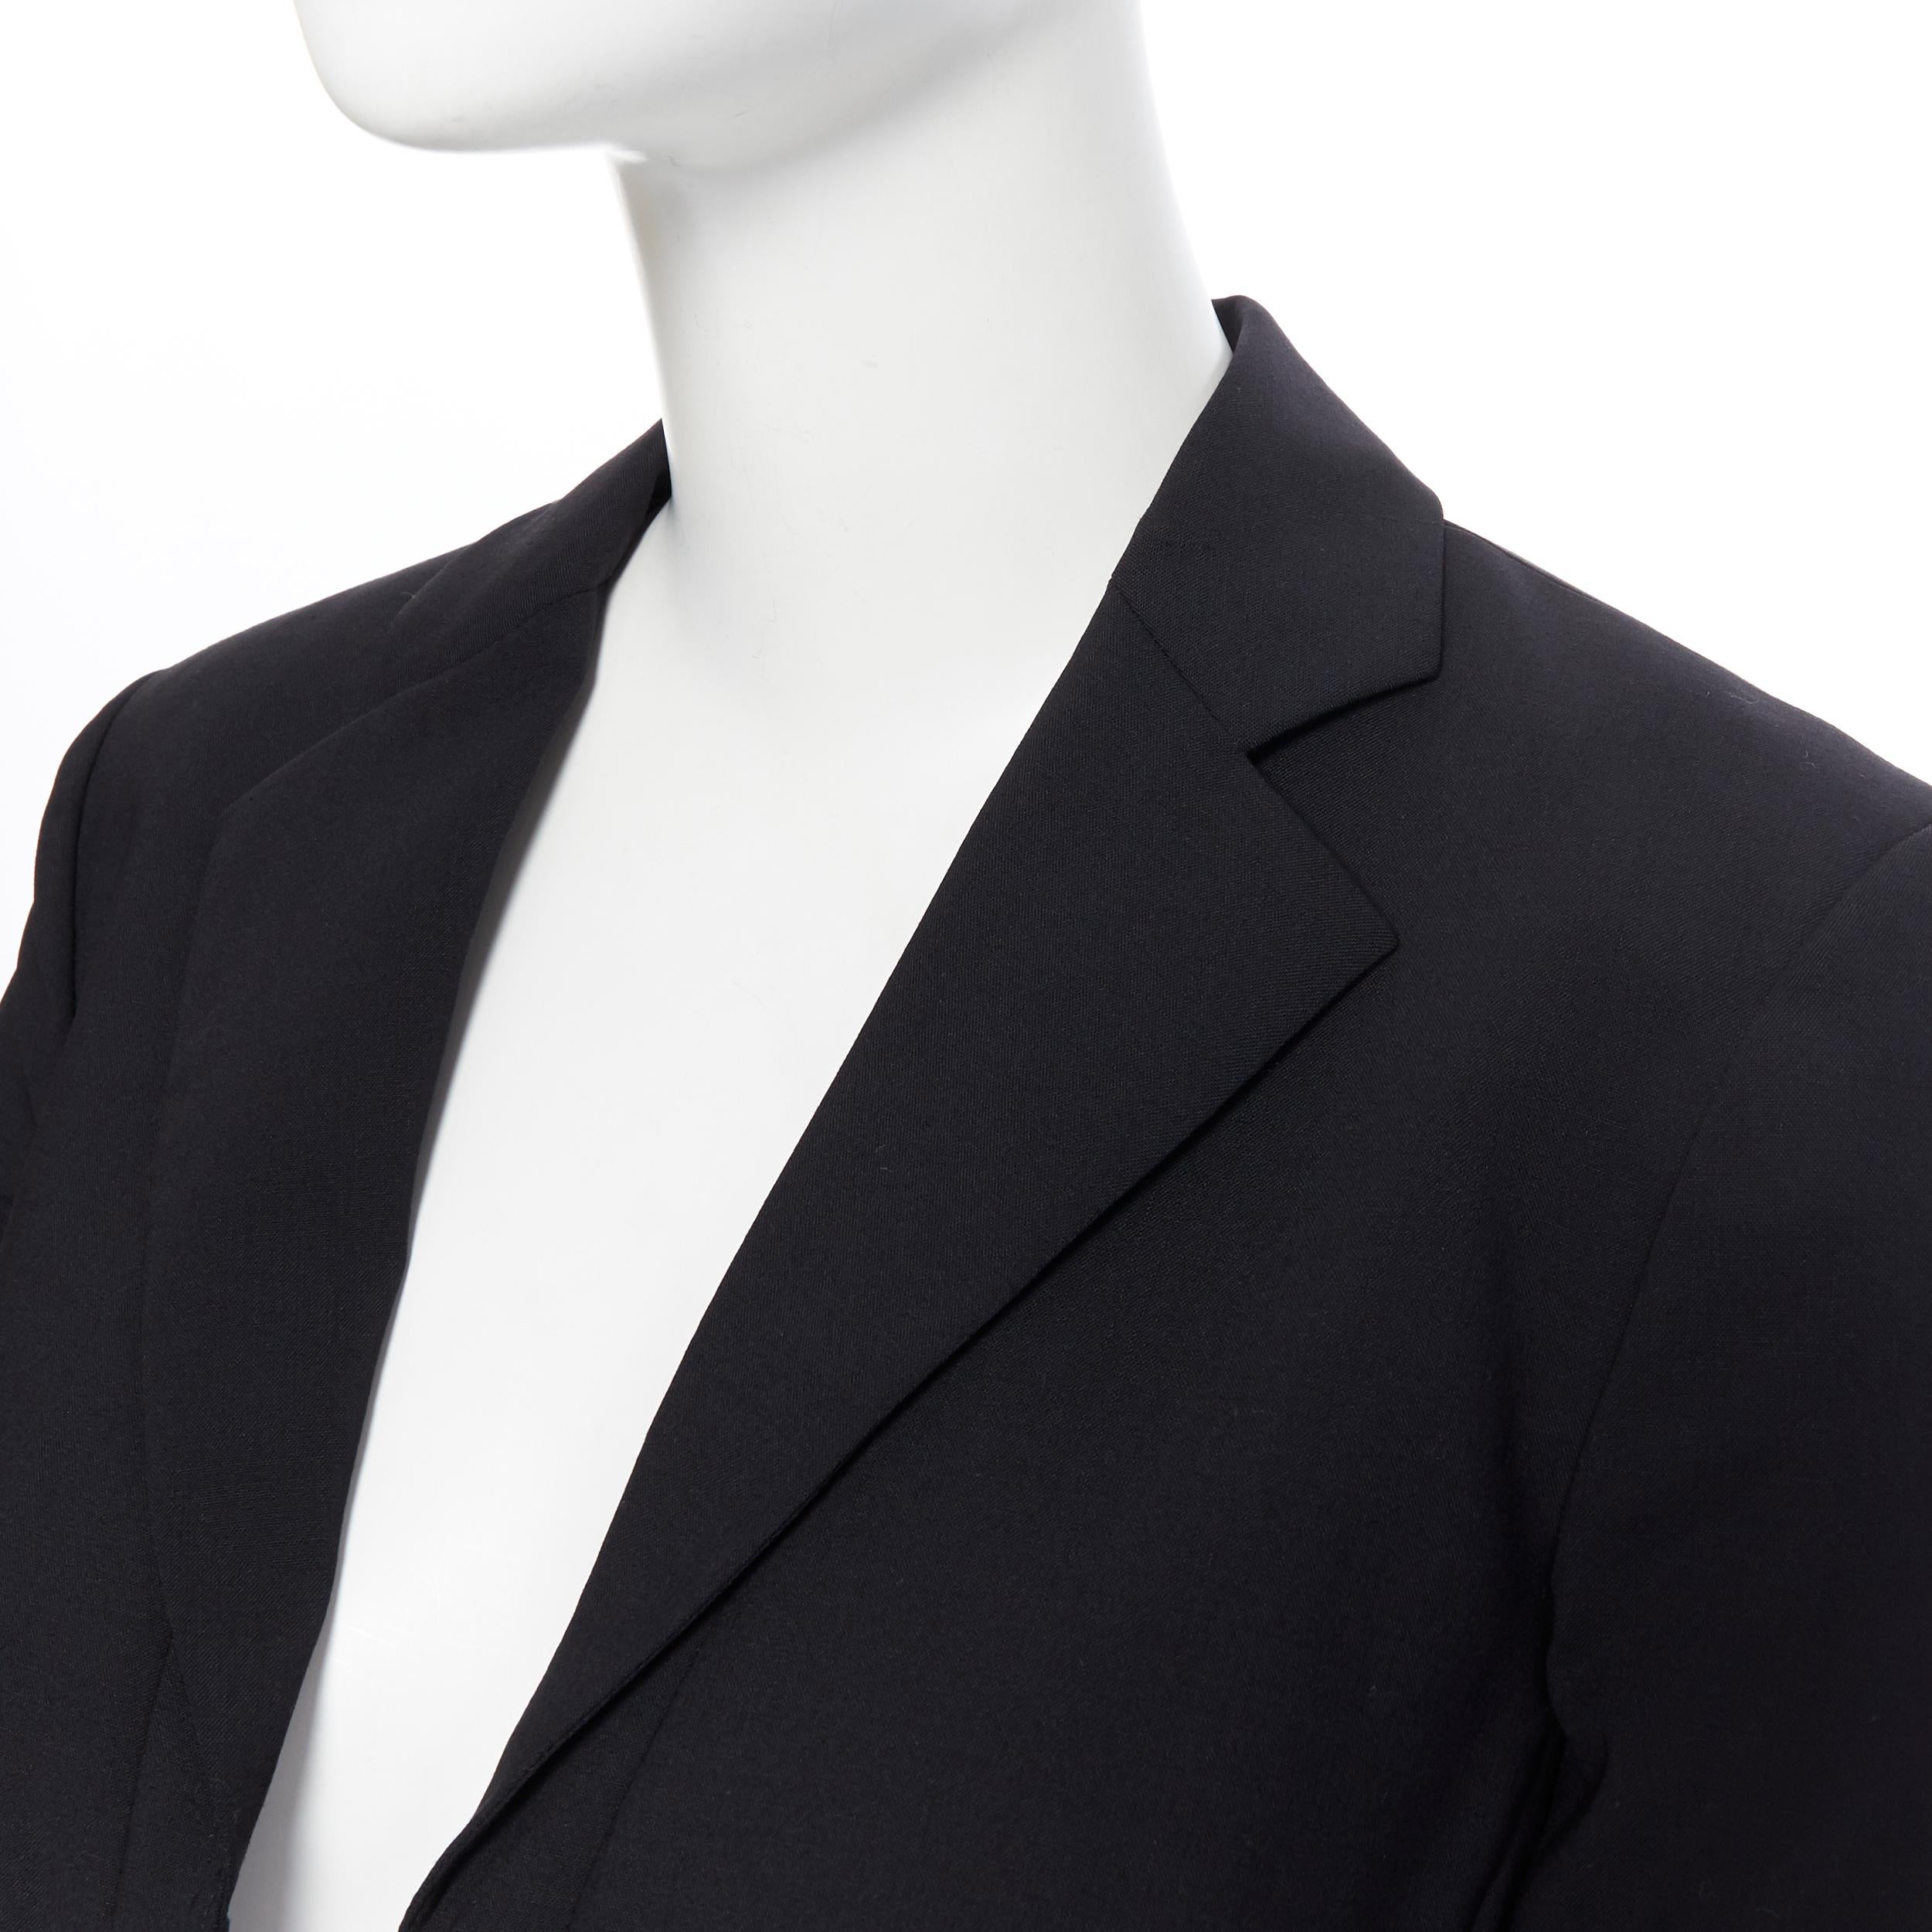 new LA PERLA SS17 Corset Jacket black bi-stretch wool zip bustier blazer IT38 B
Brand: La Perla
Collection: Spring Summer 2017
Model Name / Style: Corset jacket
Material: Wool
Color: Black
Pattern: Solid
Closure: Zip
Lining material: Silk
Extra